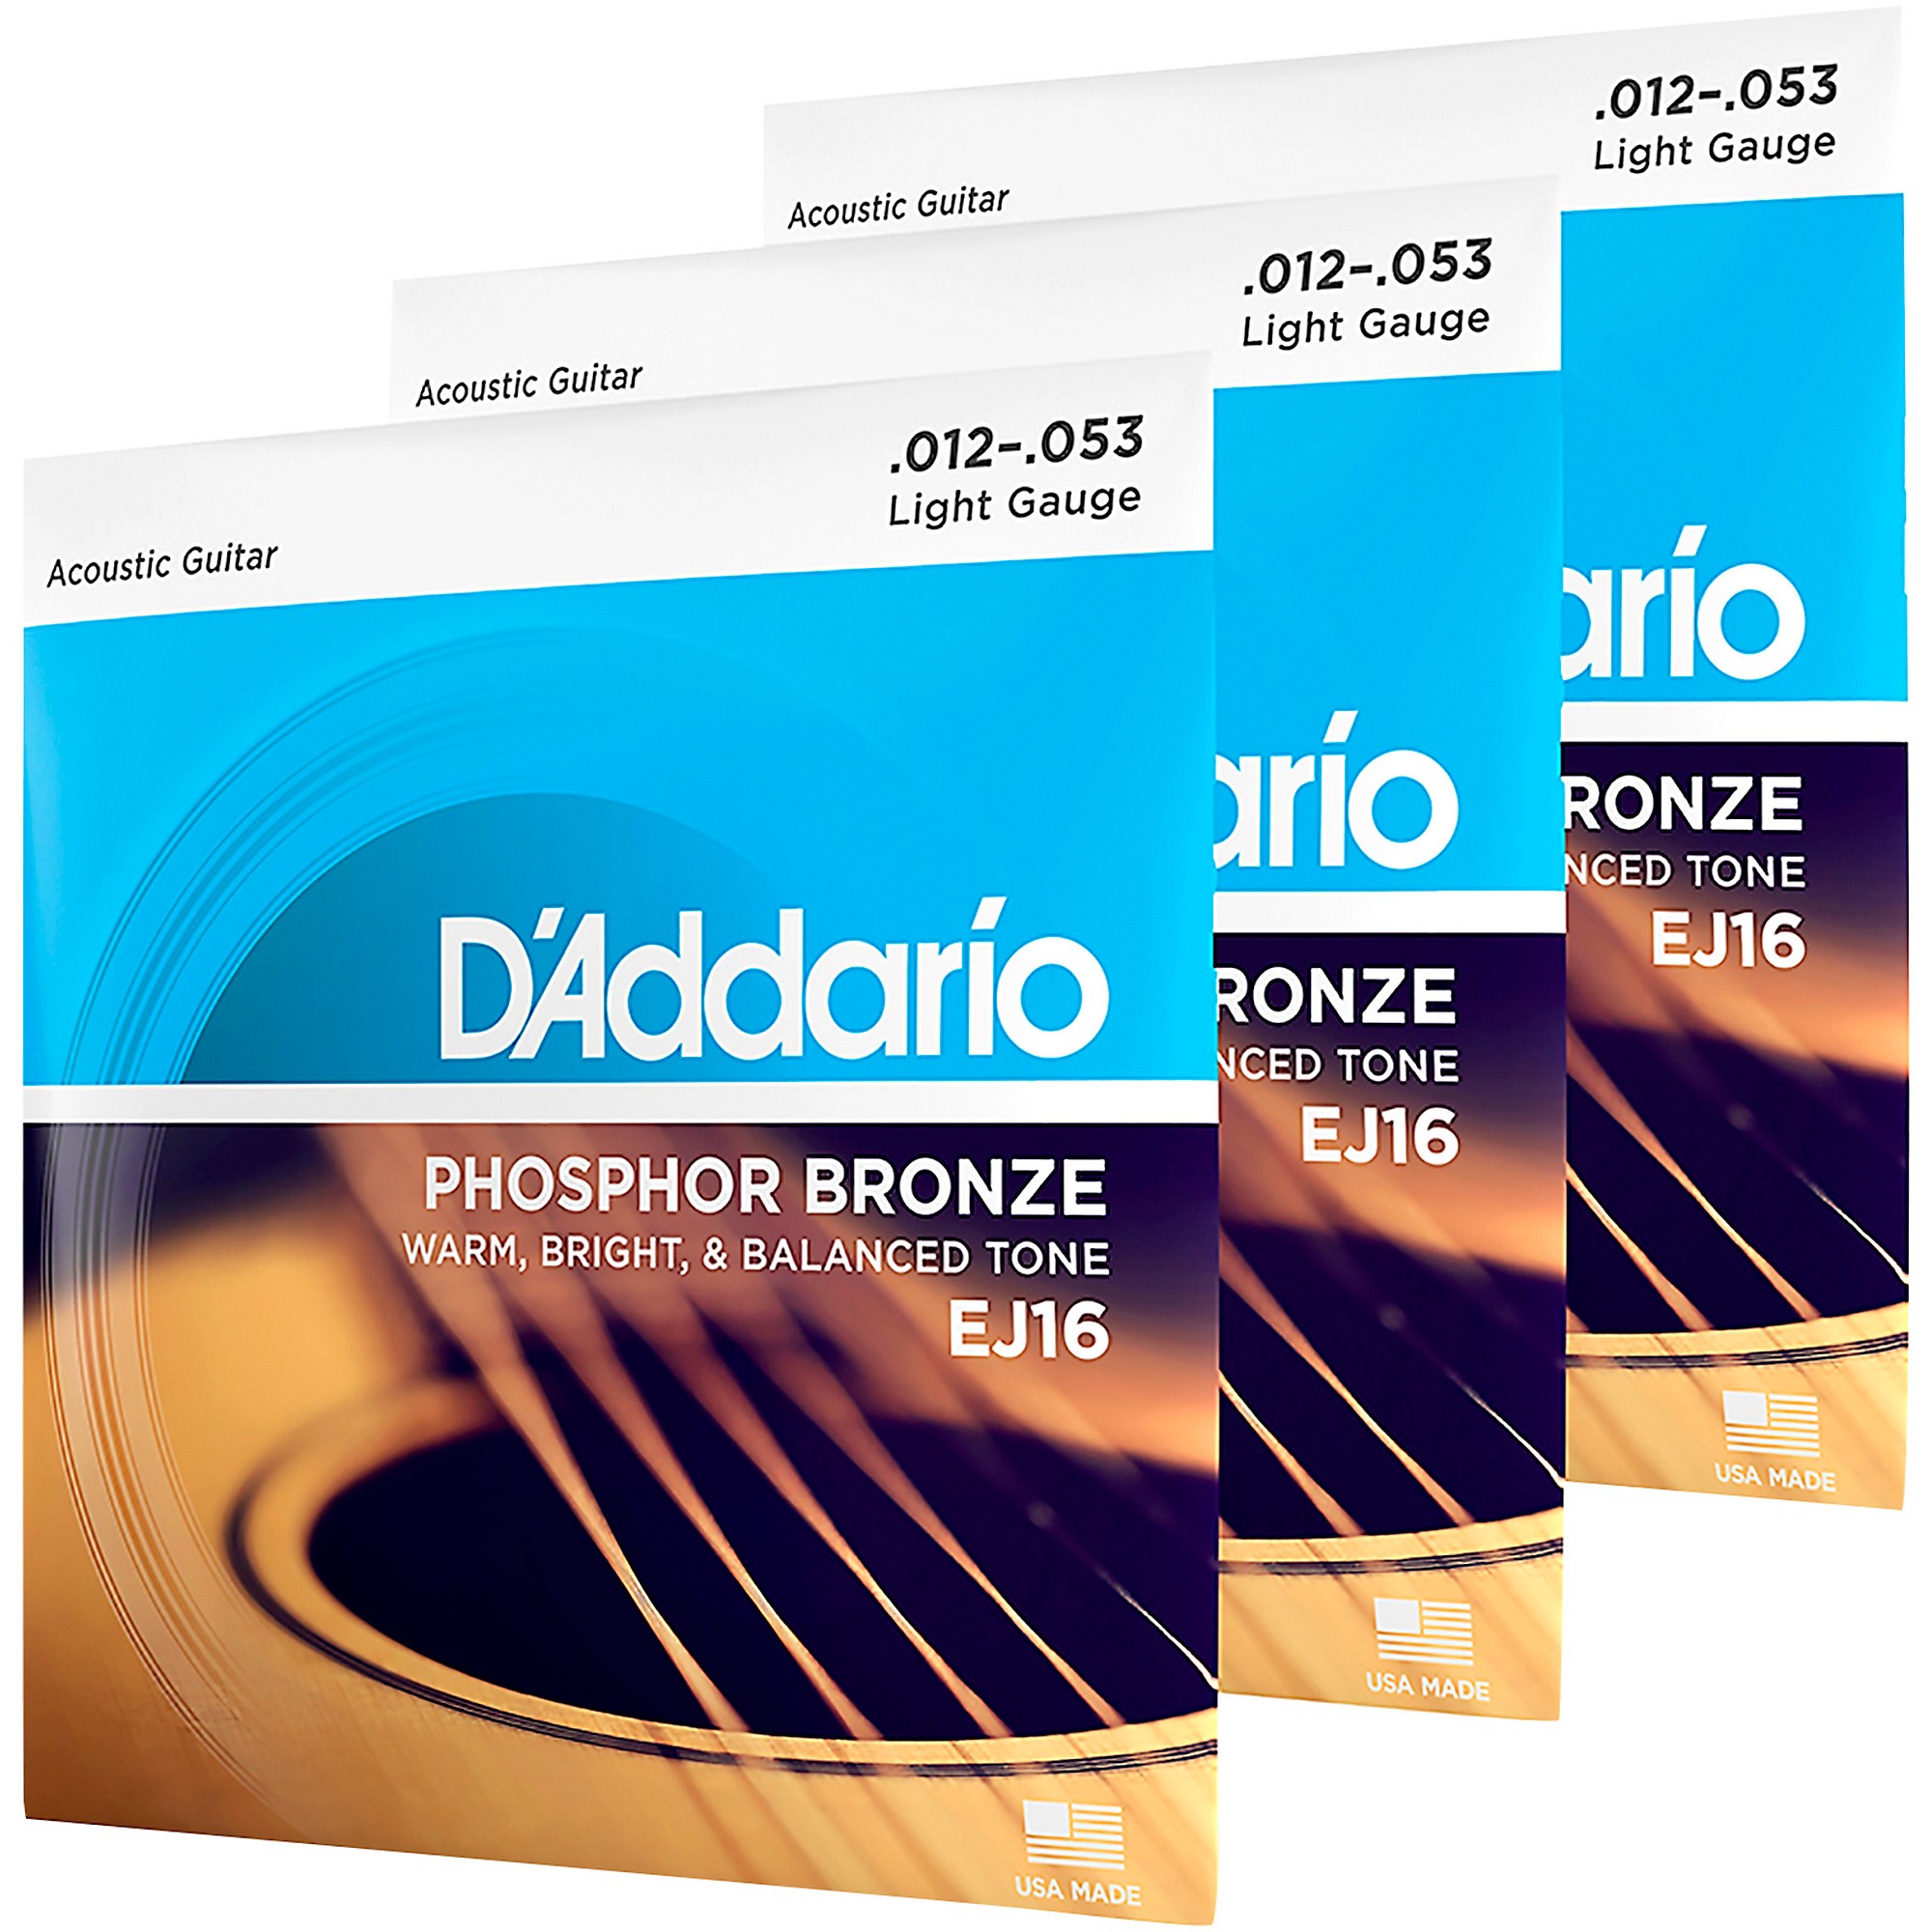 D'Addario Guitar Strings - Phosphor Bronze Acoustic Guitar Strings -  EJ16-3D - Rich, Full Tonal Spectrum - For 6 String Guitars - 12-53 Light,  3-Pack